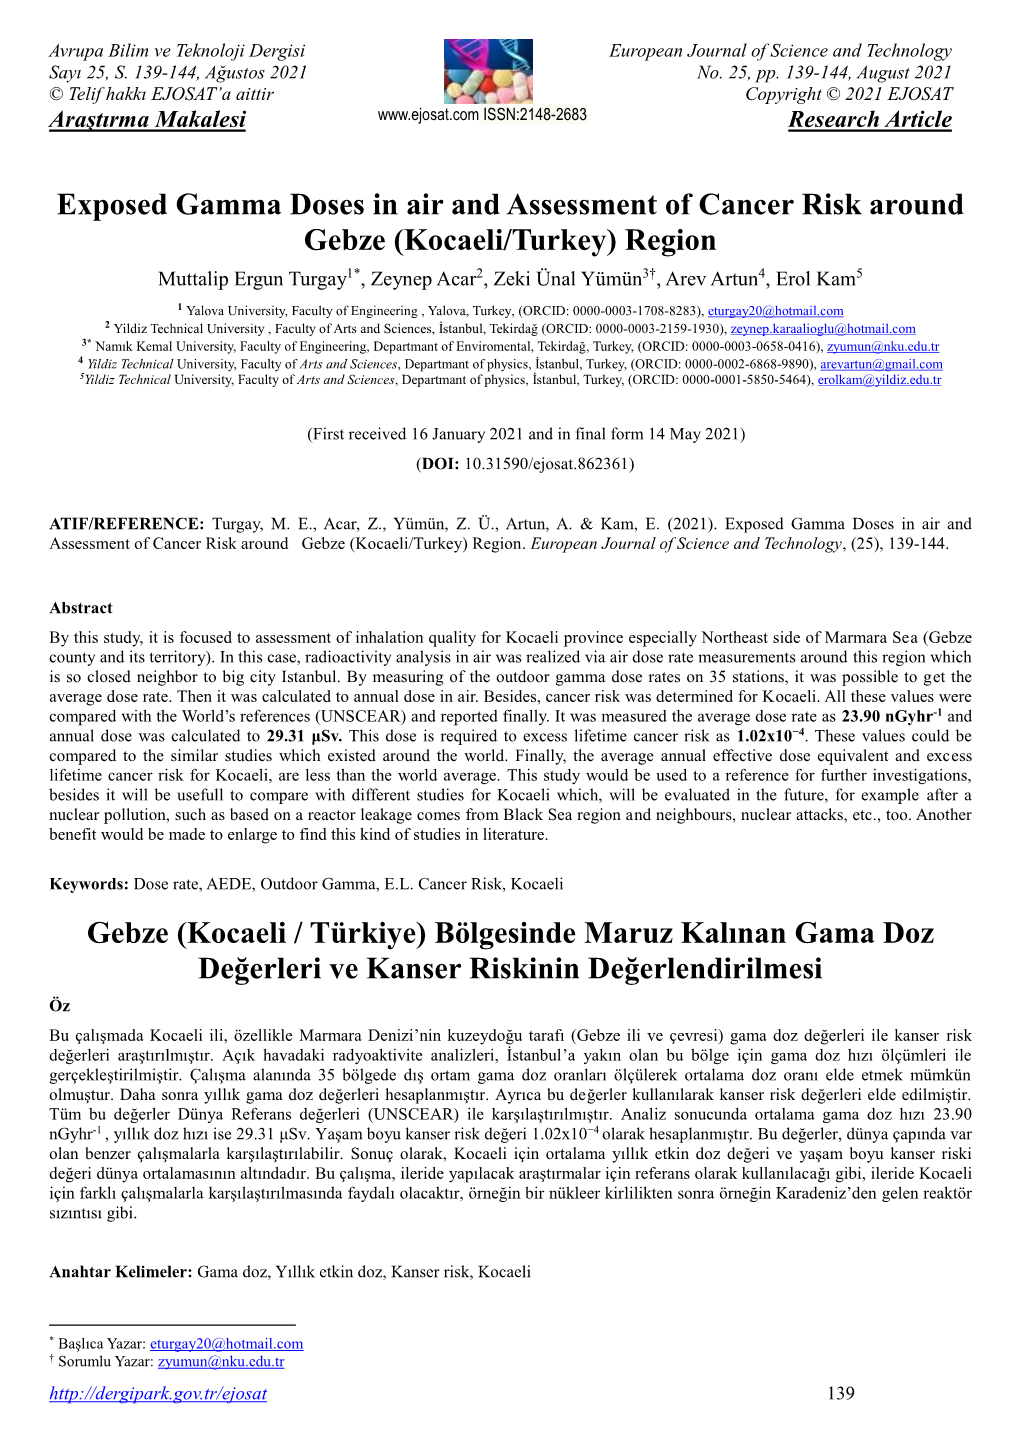 Exposed Gamma Doses in Air and Assessment of Cancer Risk Around Gebze (Kocaeli/Turkey) Region Gebze (Kocaeli / Türkiye) Bölg